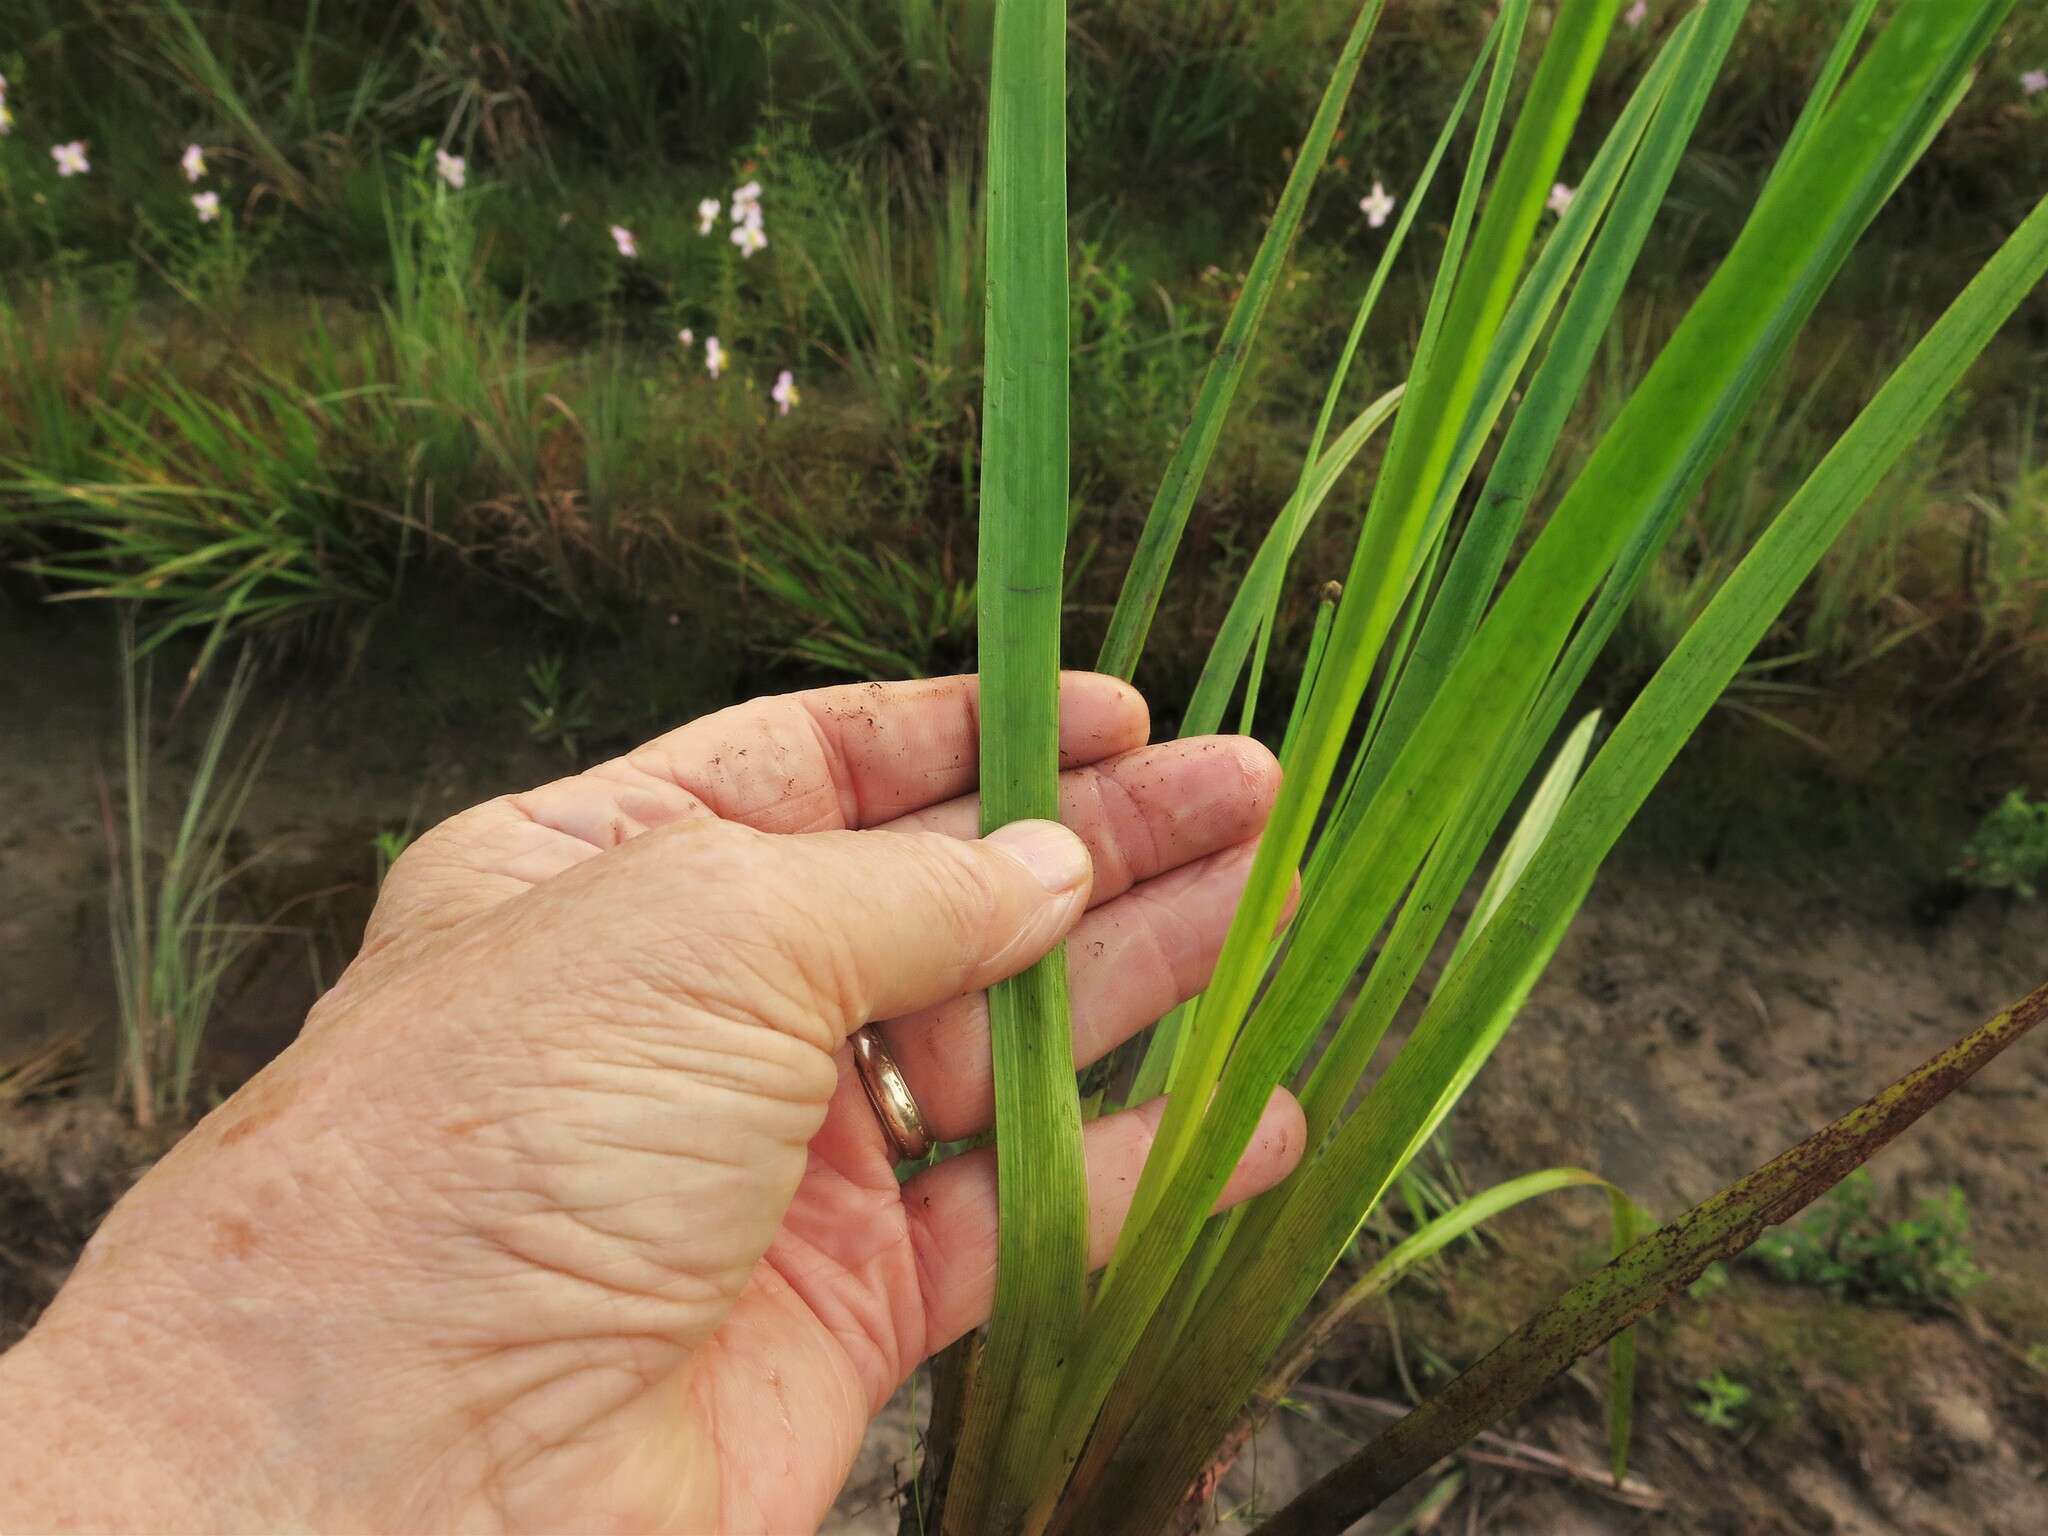 Image of irisleaf yelloweyed grass